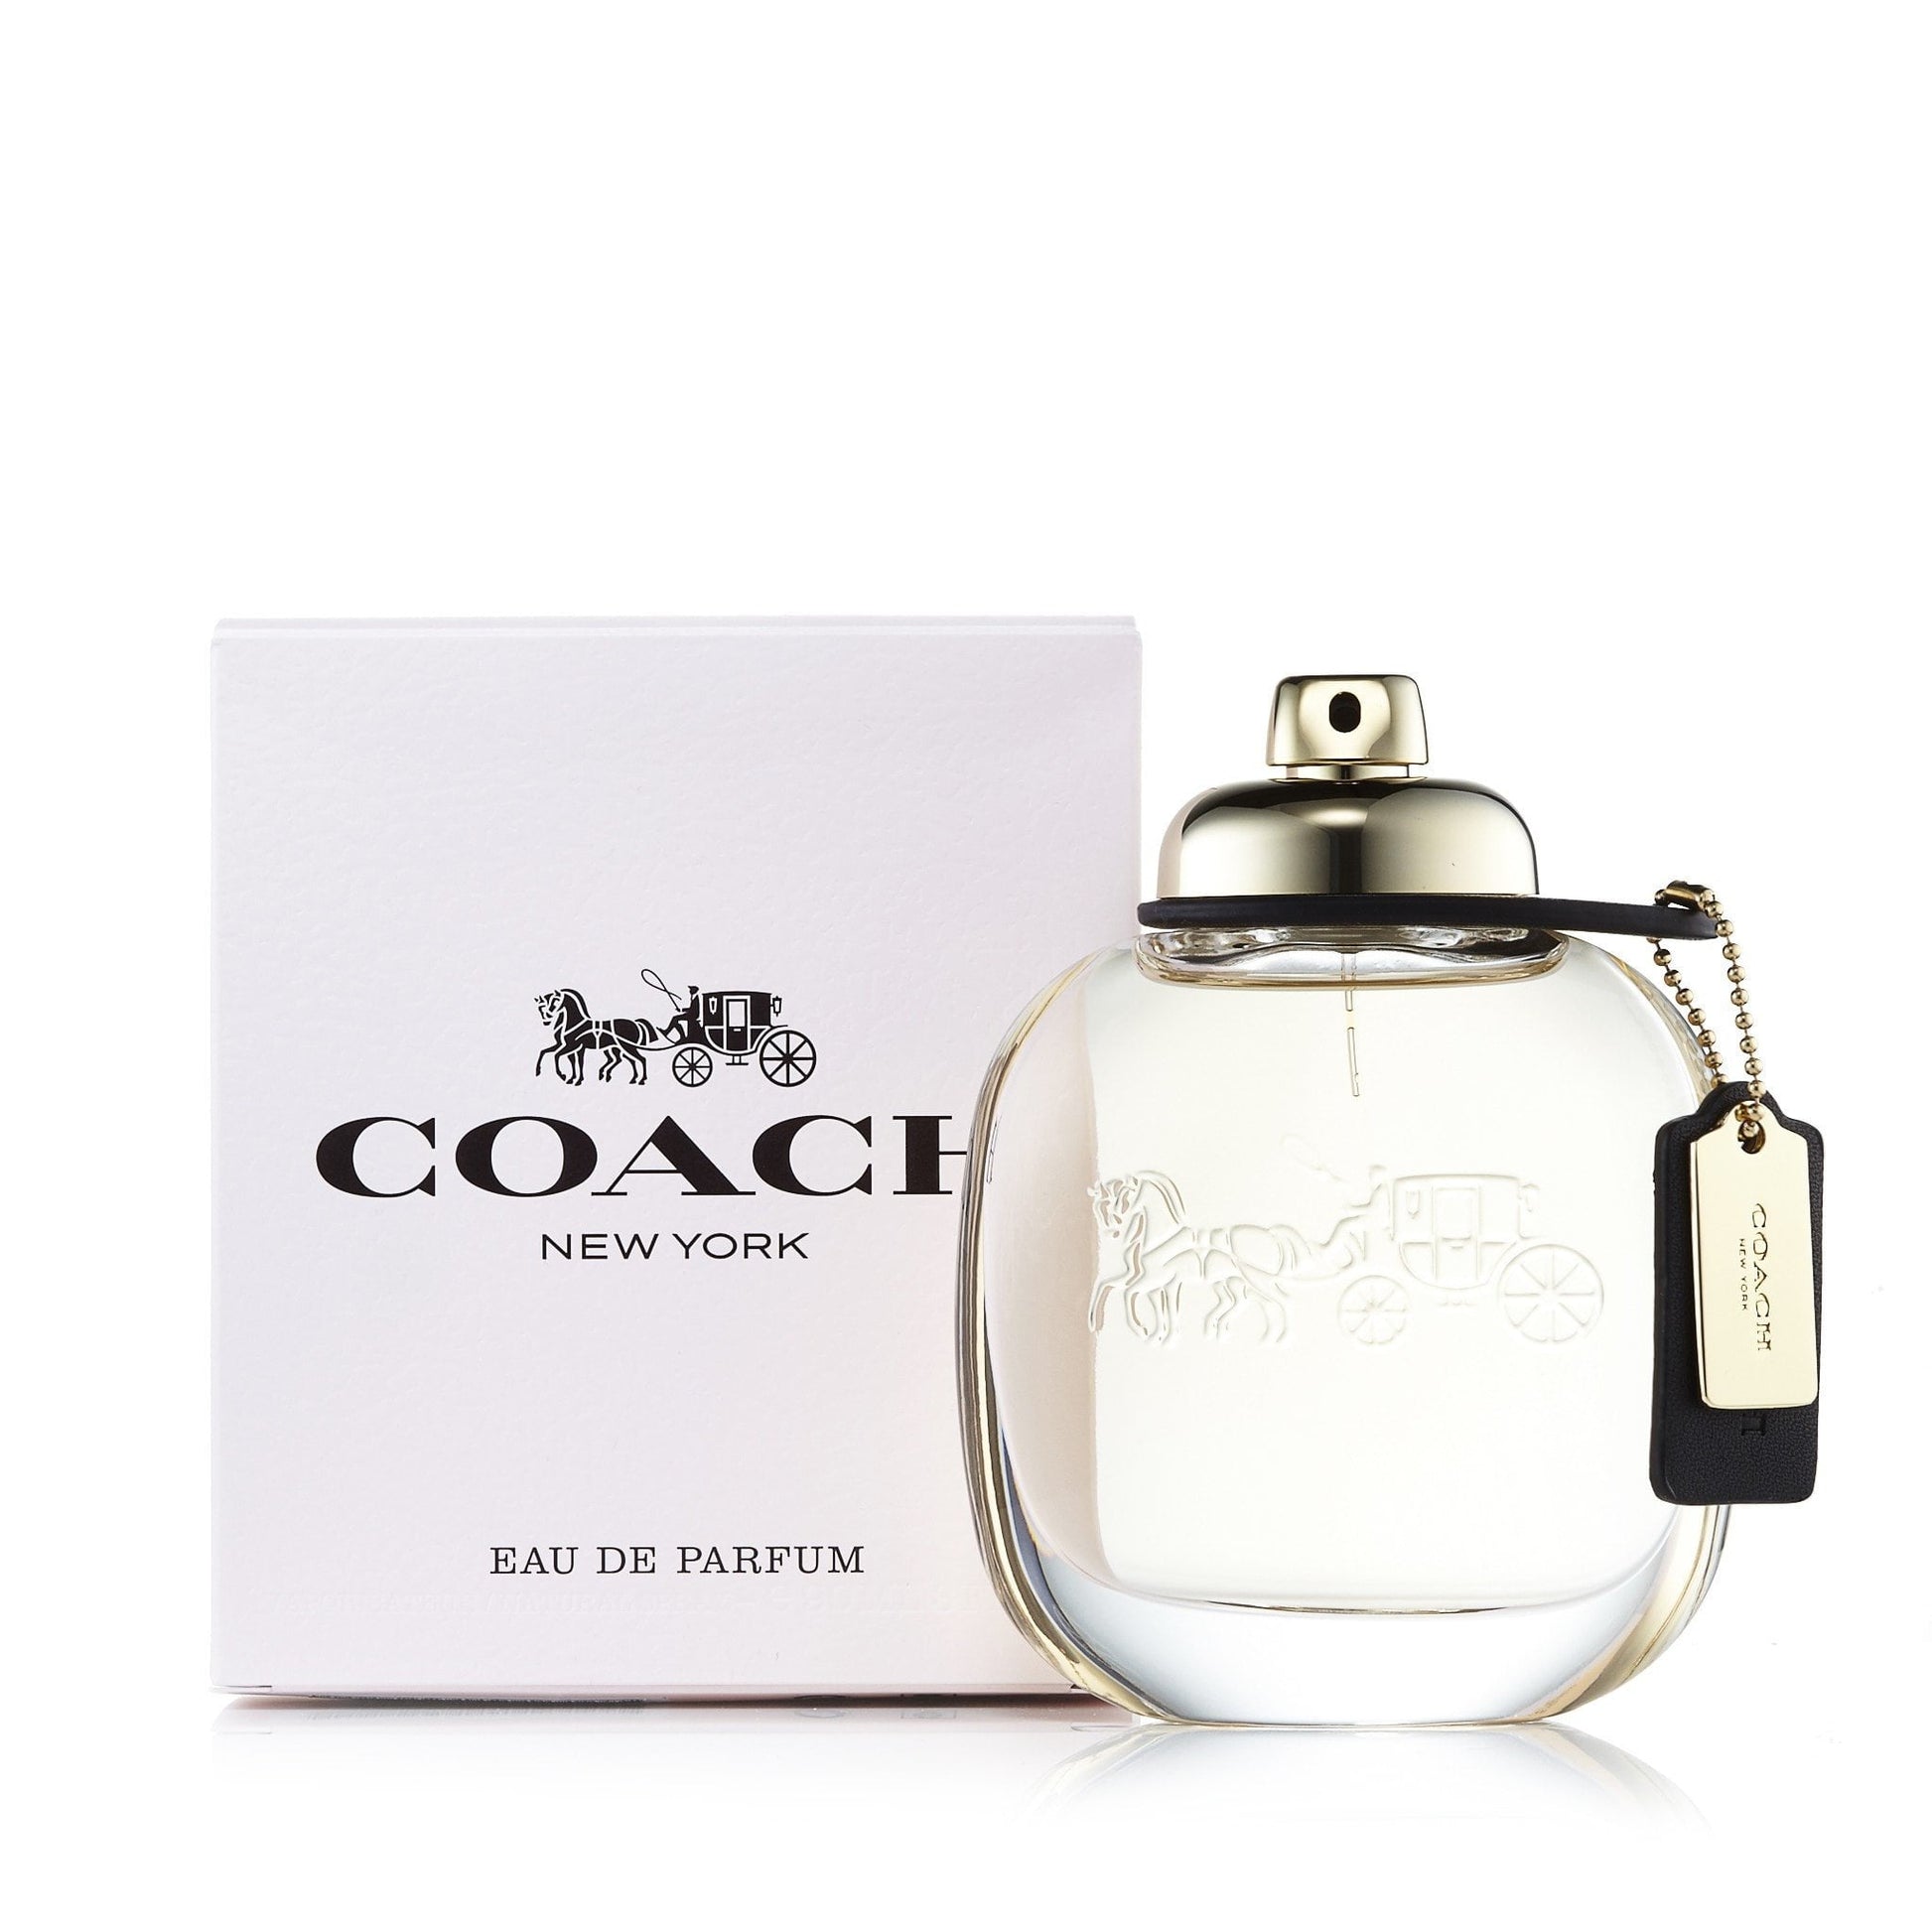 Coach New York Perfume Women's Eau de Parfum Spray - 3 fl oz bottle